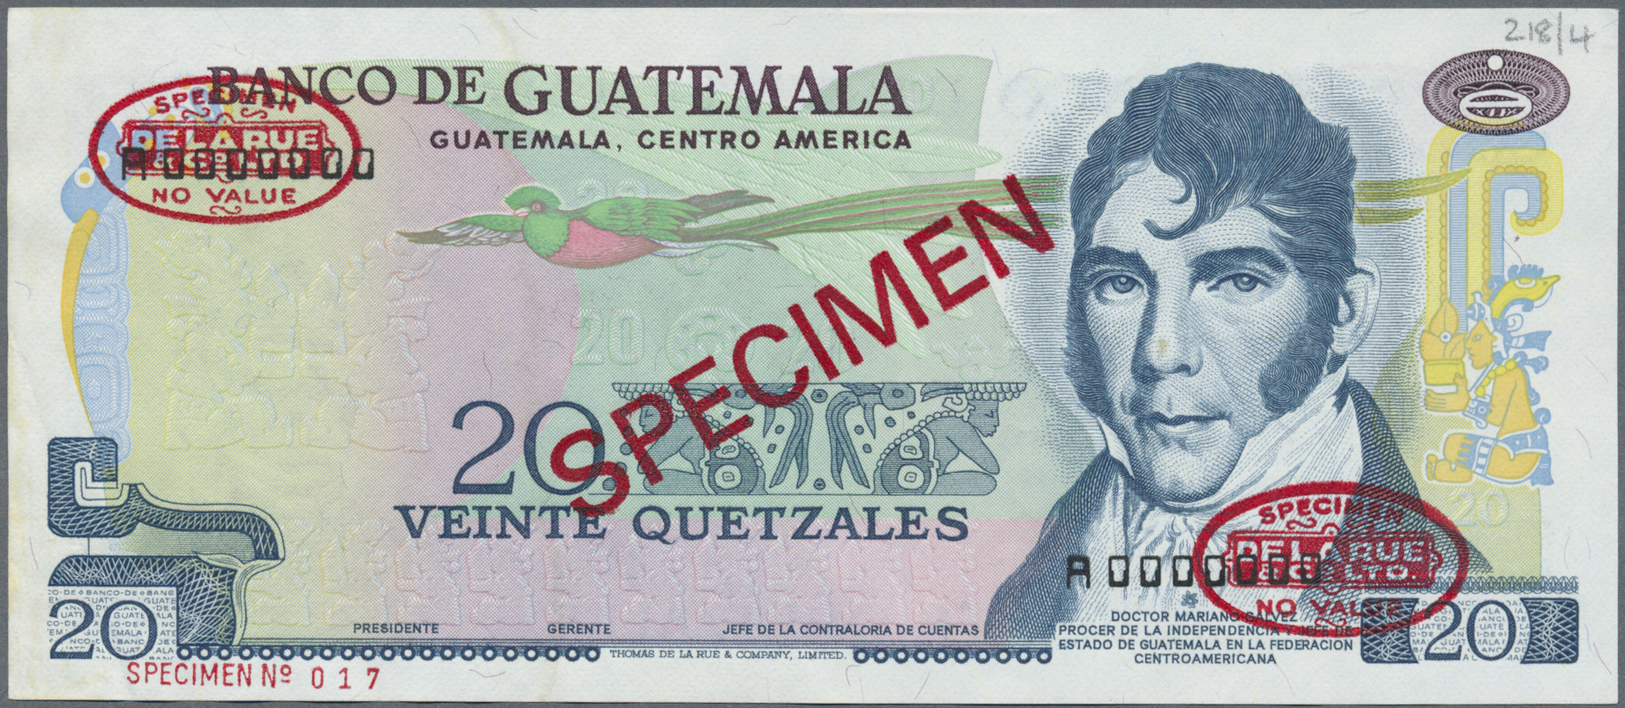 00966 Guatemala: 20 Quetzales 1972-83 SPECIMEN, P.62s With Two Oval Stampa "Specimen-no Value De La Rua & Co Ltd" At Upp - Guatemala